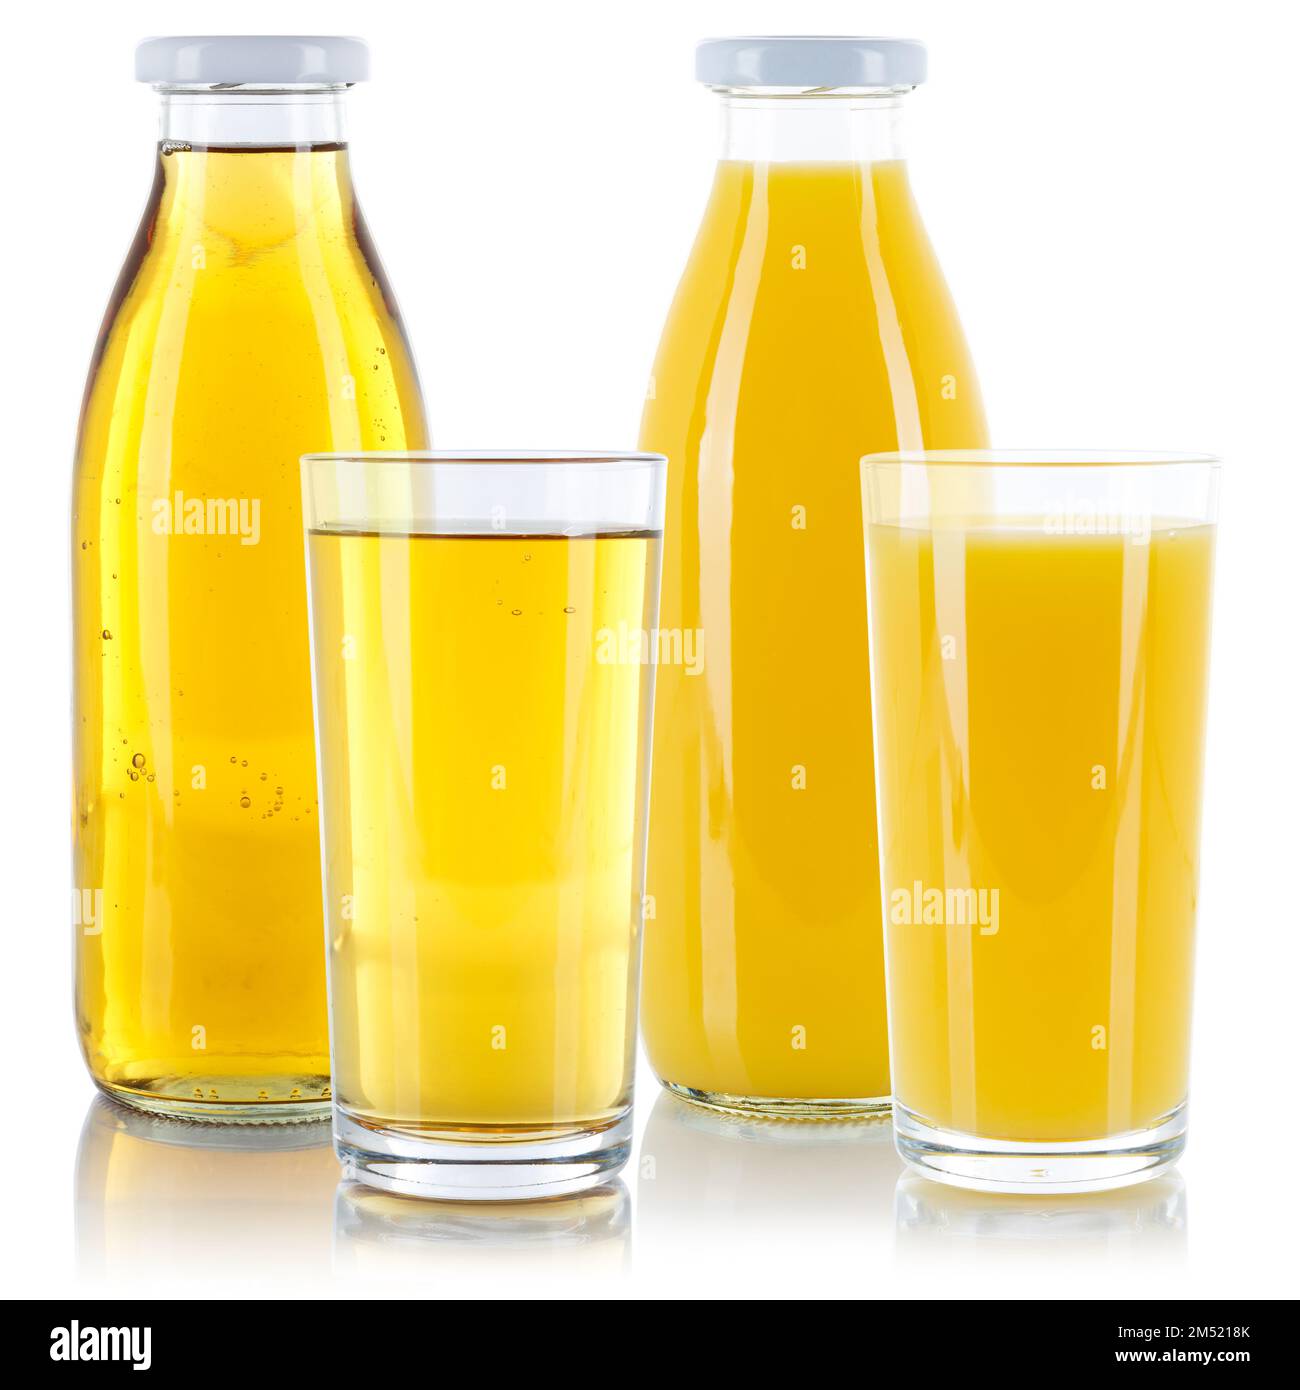 Apple and orange juice bottle glass isolated on a white background Stock Photo